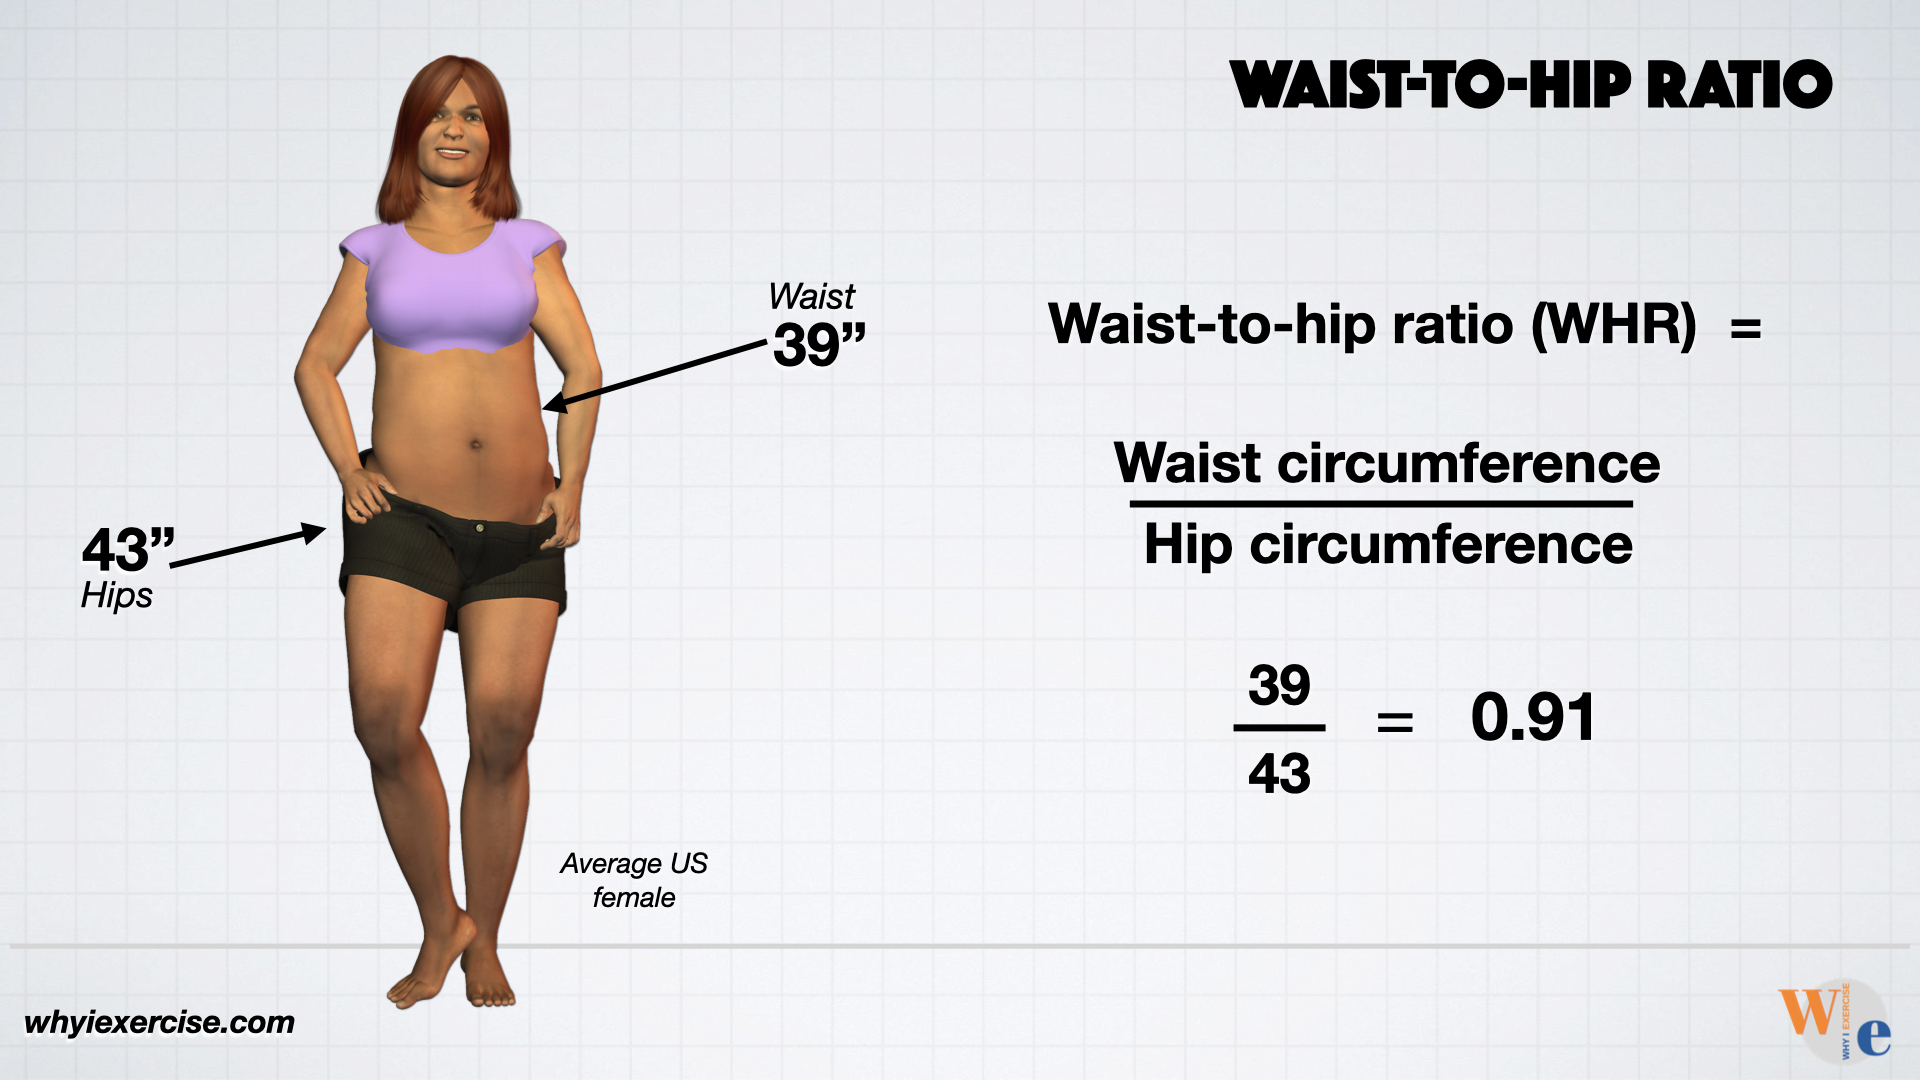 Optimal waist-to-hip ratio